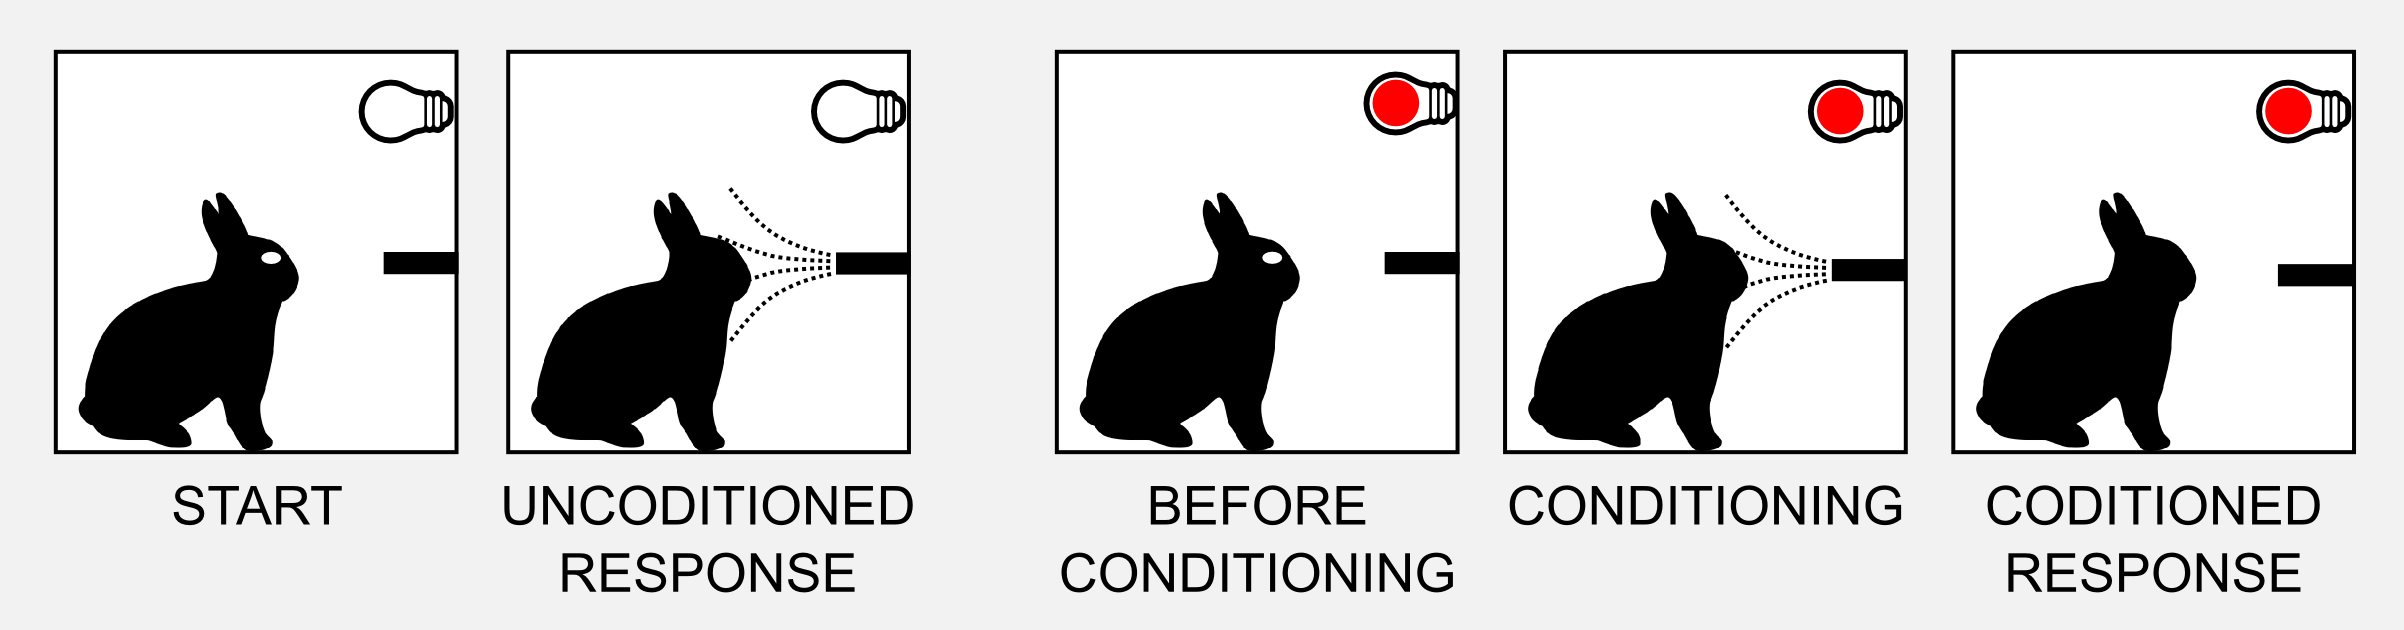 Eyeblinking Conditioning in Rabbits